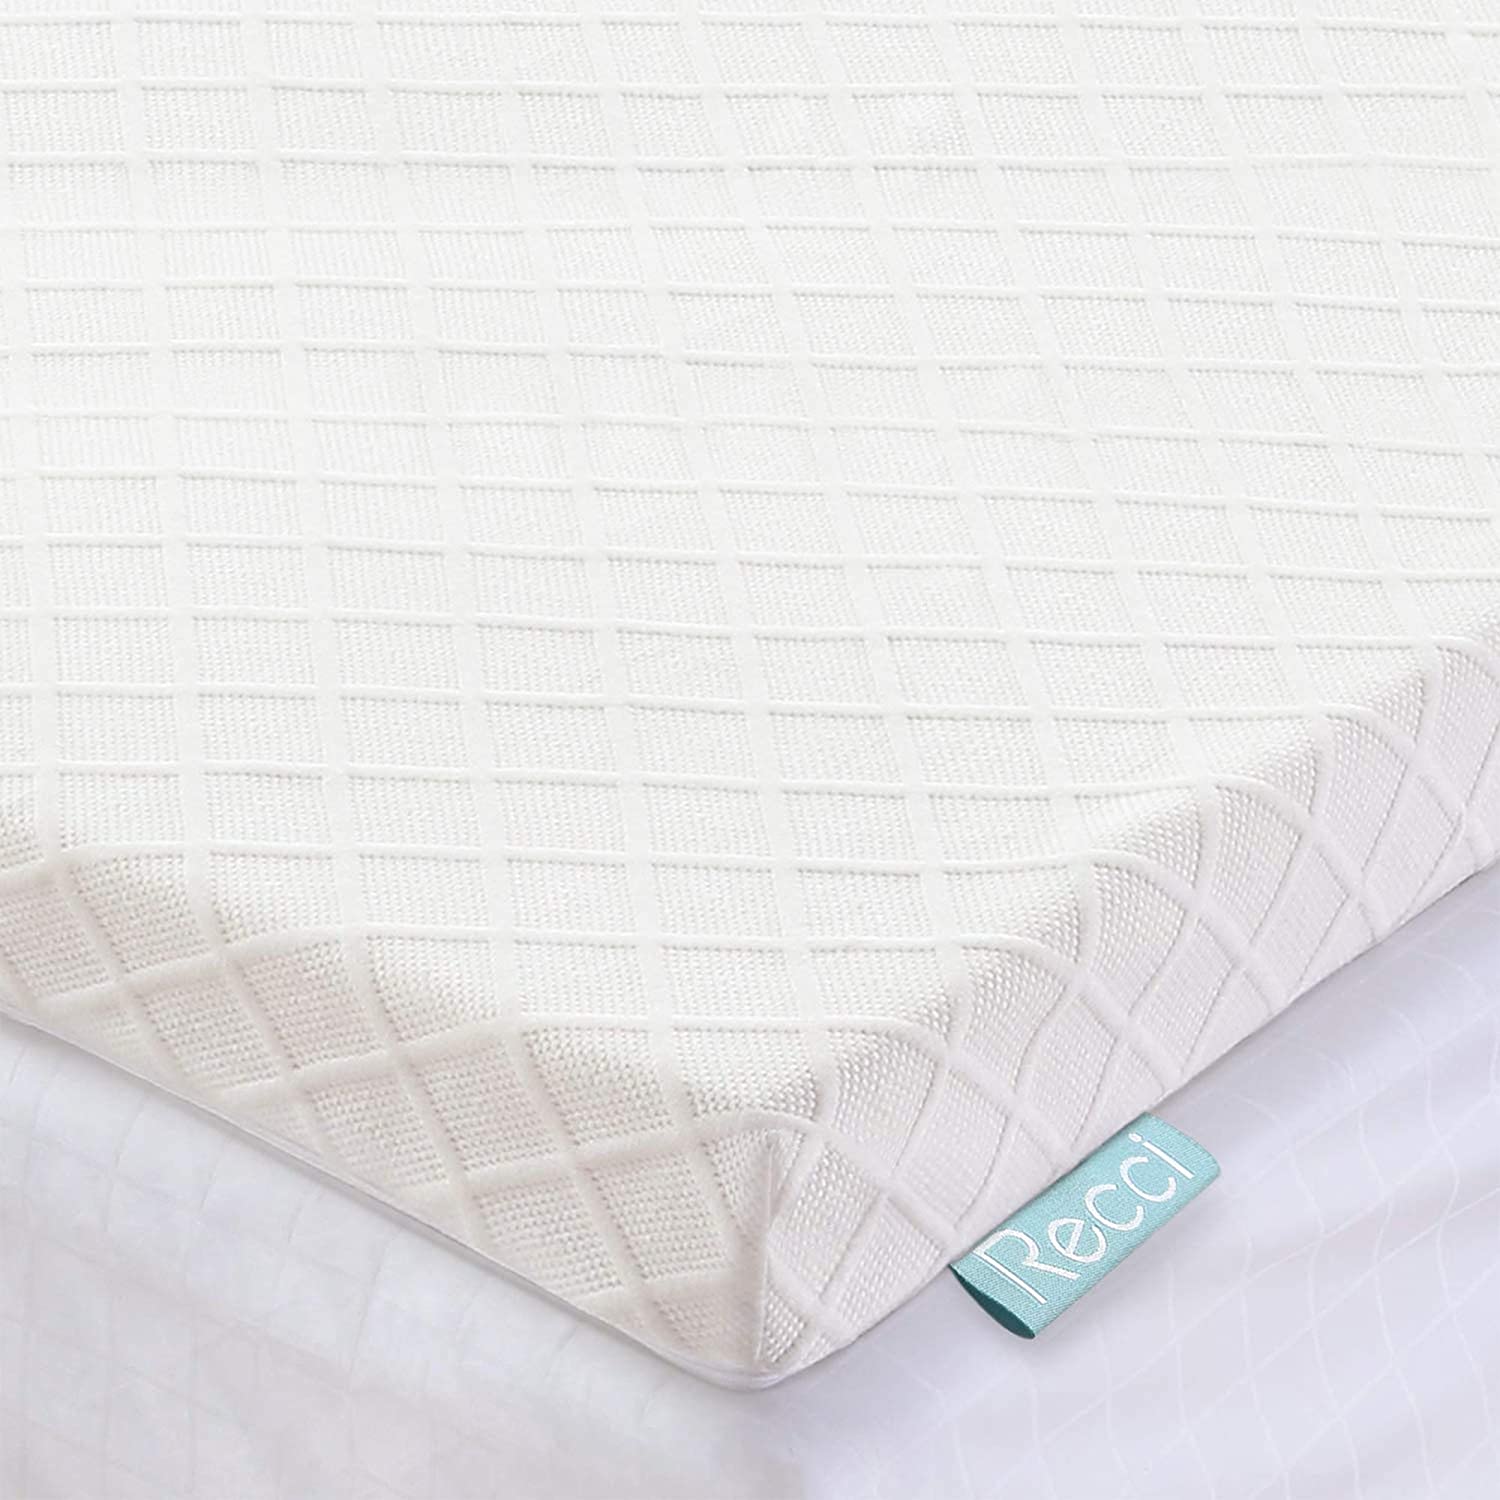 Recci memory foam mattress